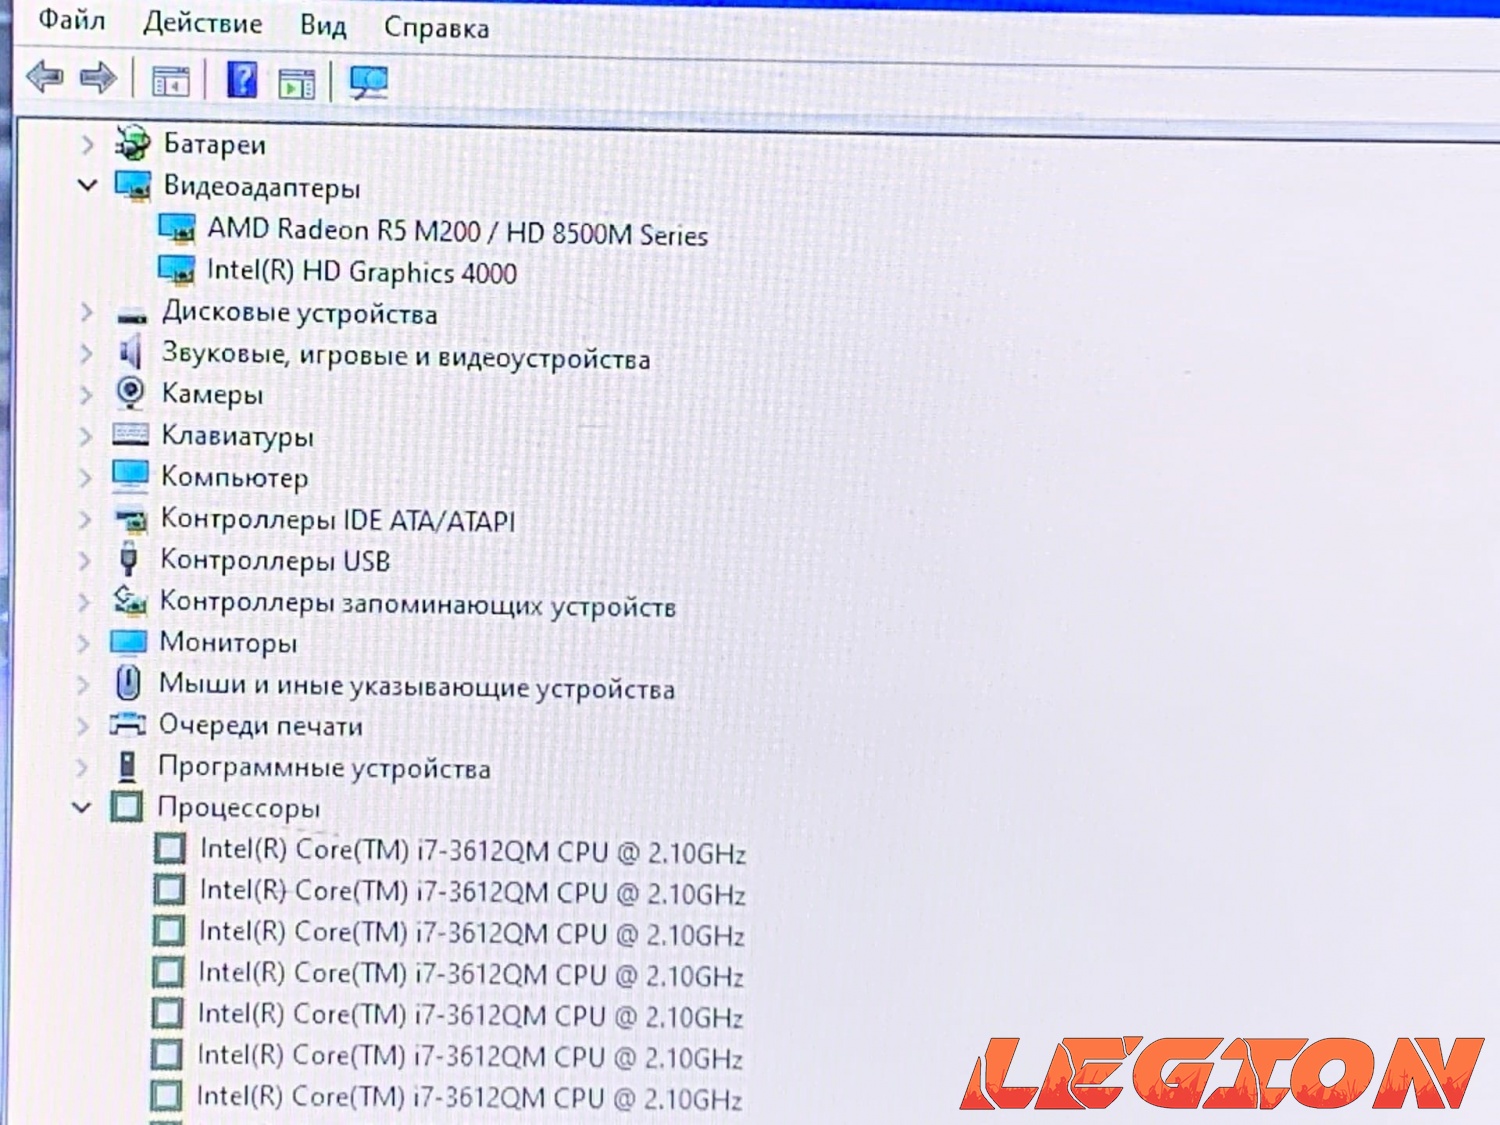 Lenovo/i7 3612/4GB/AMD R5 M200/128GB SSD/15.6